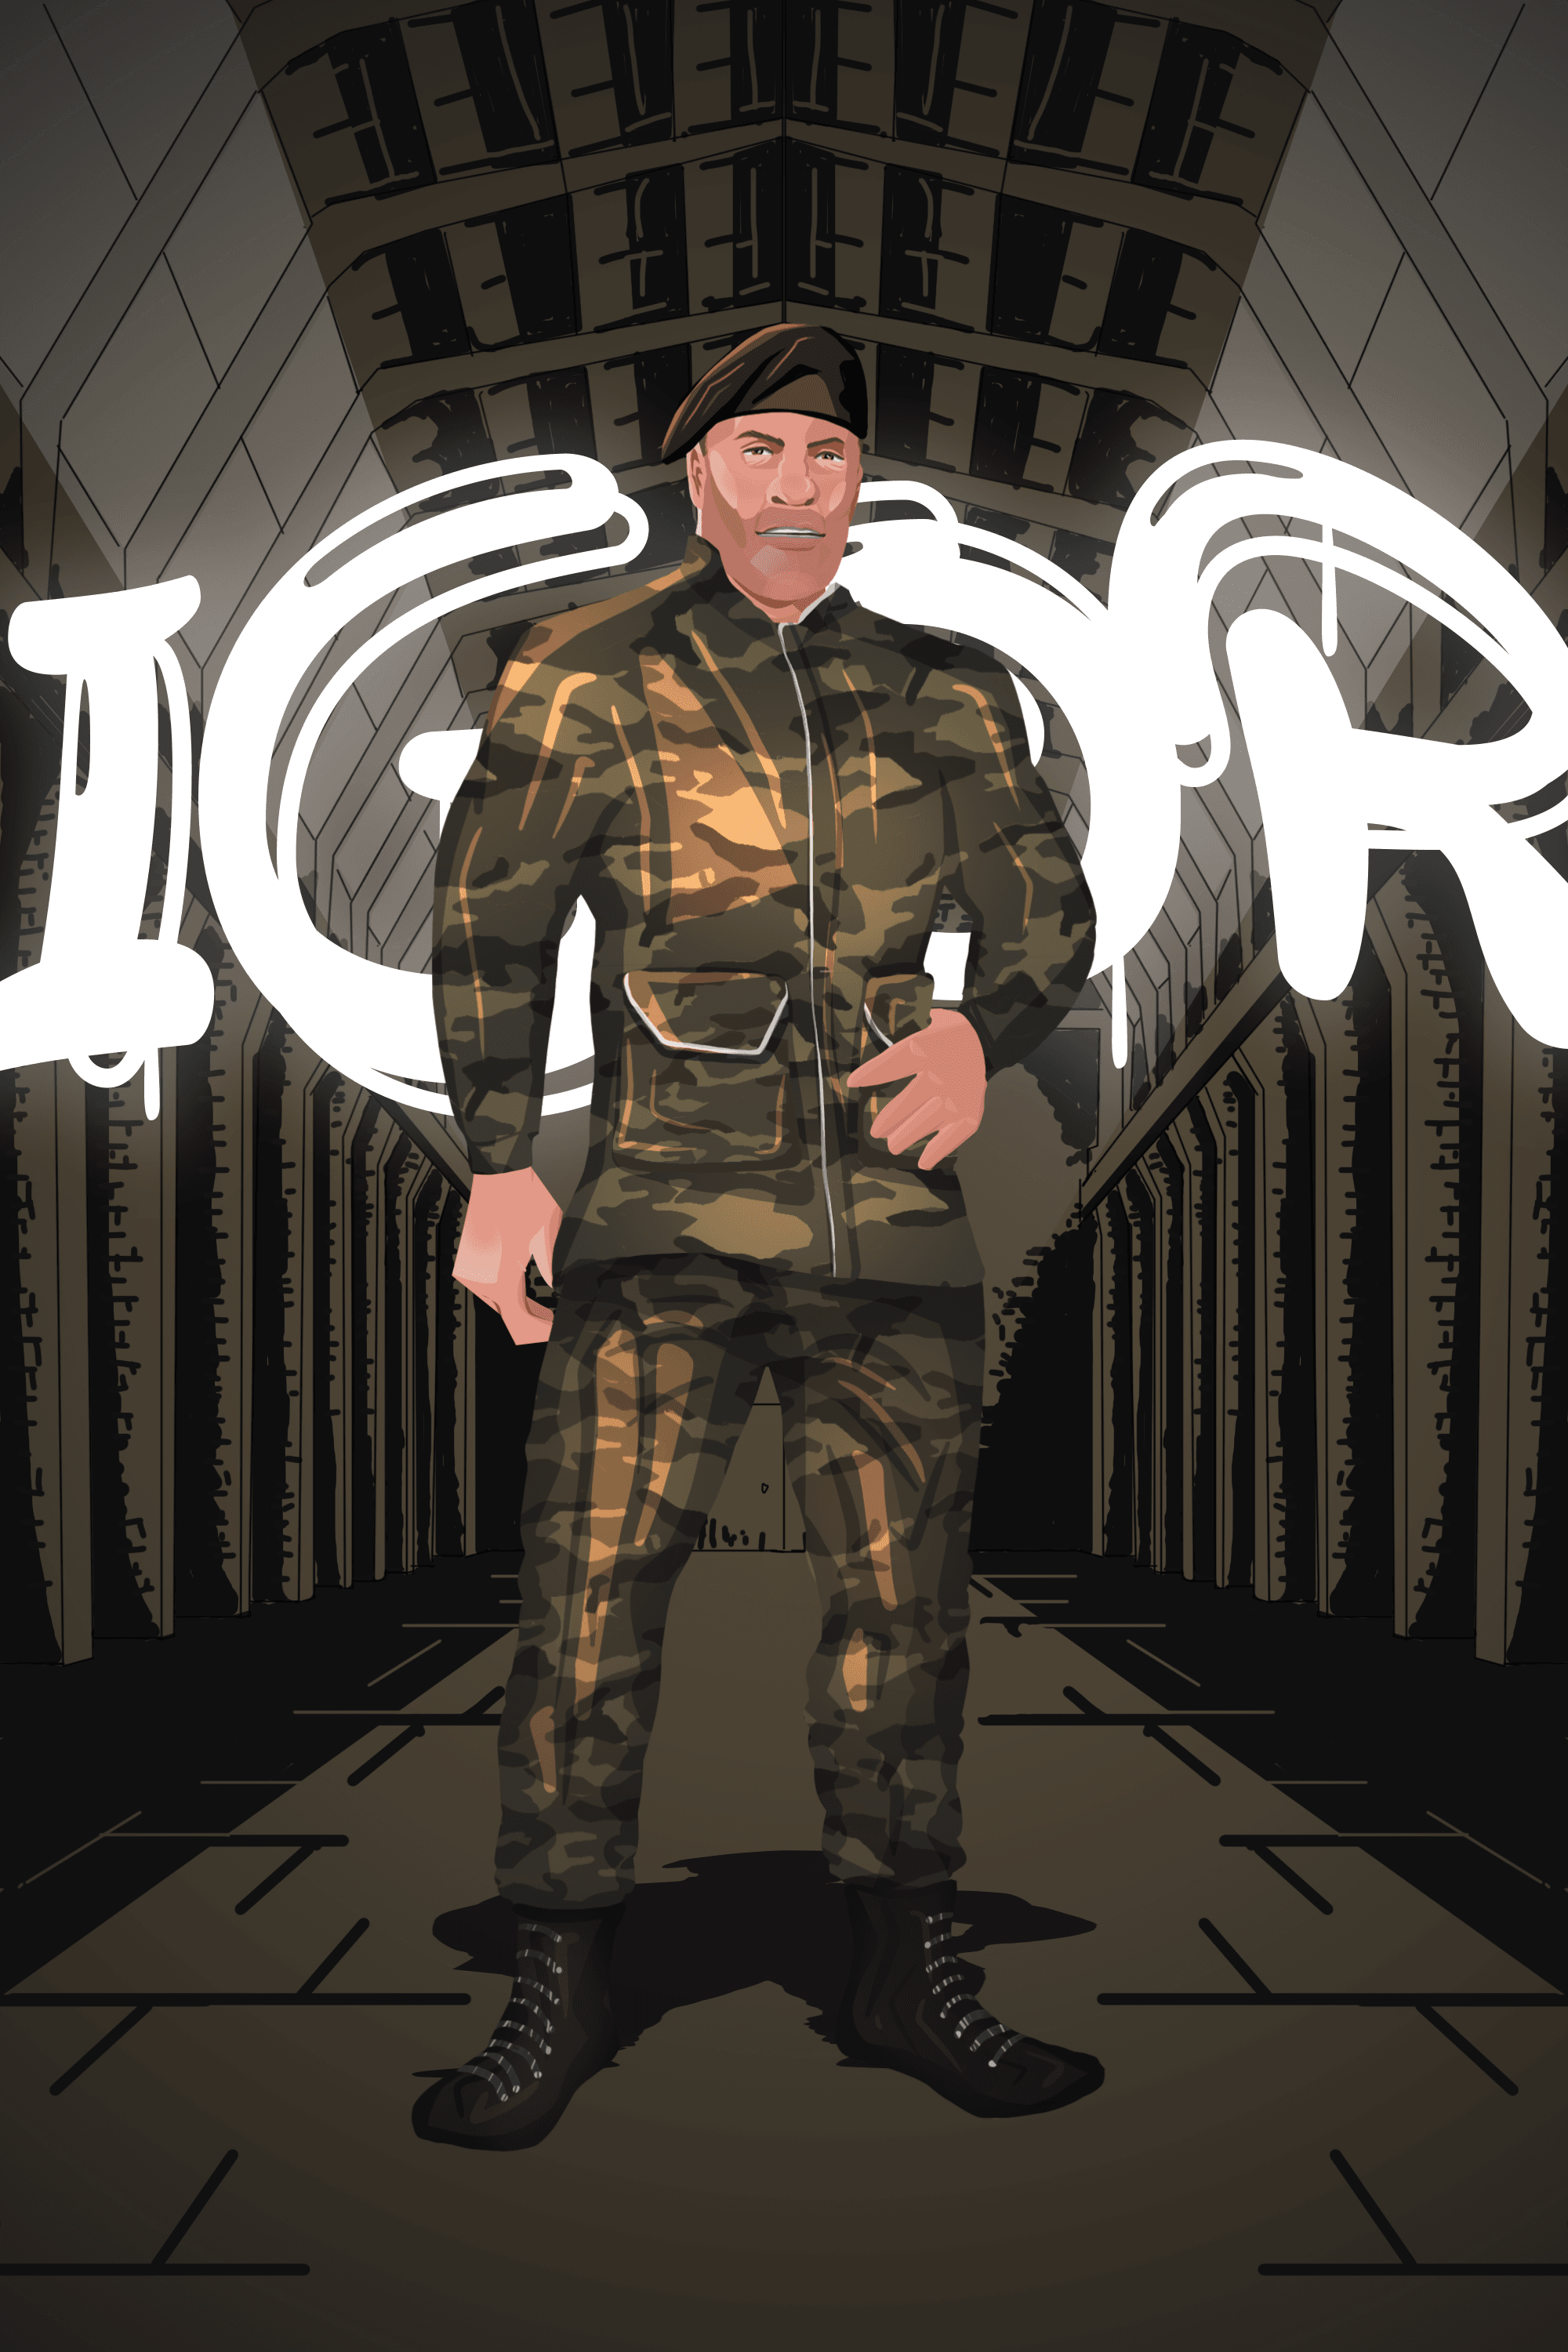 İgor the Soldier